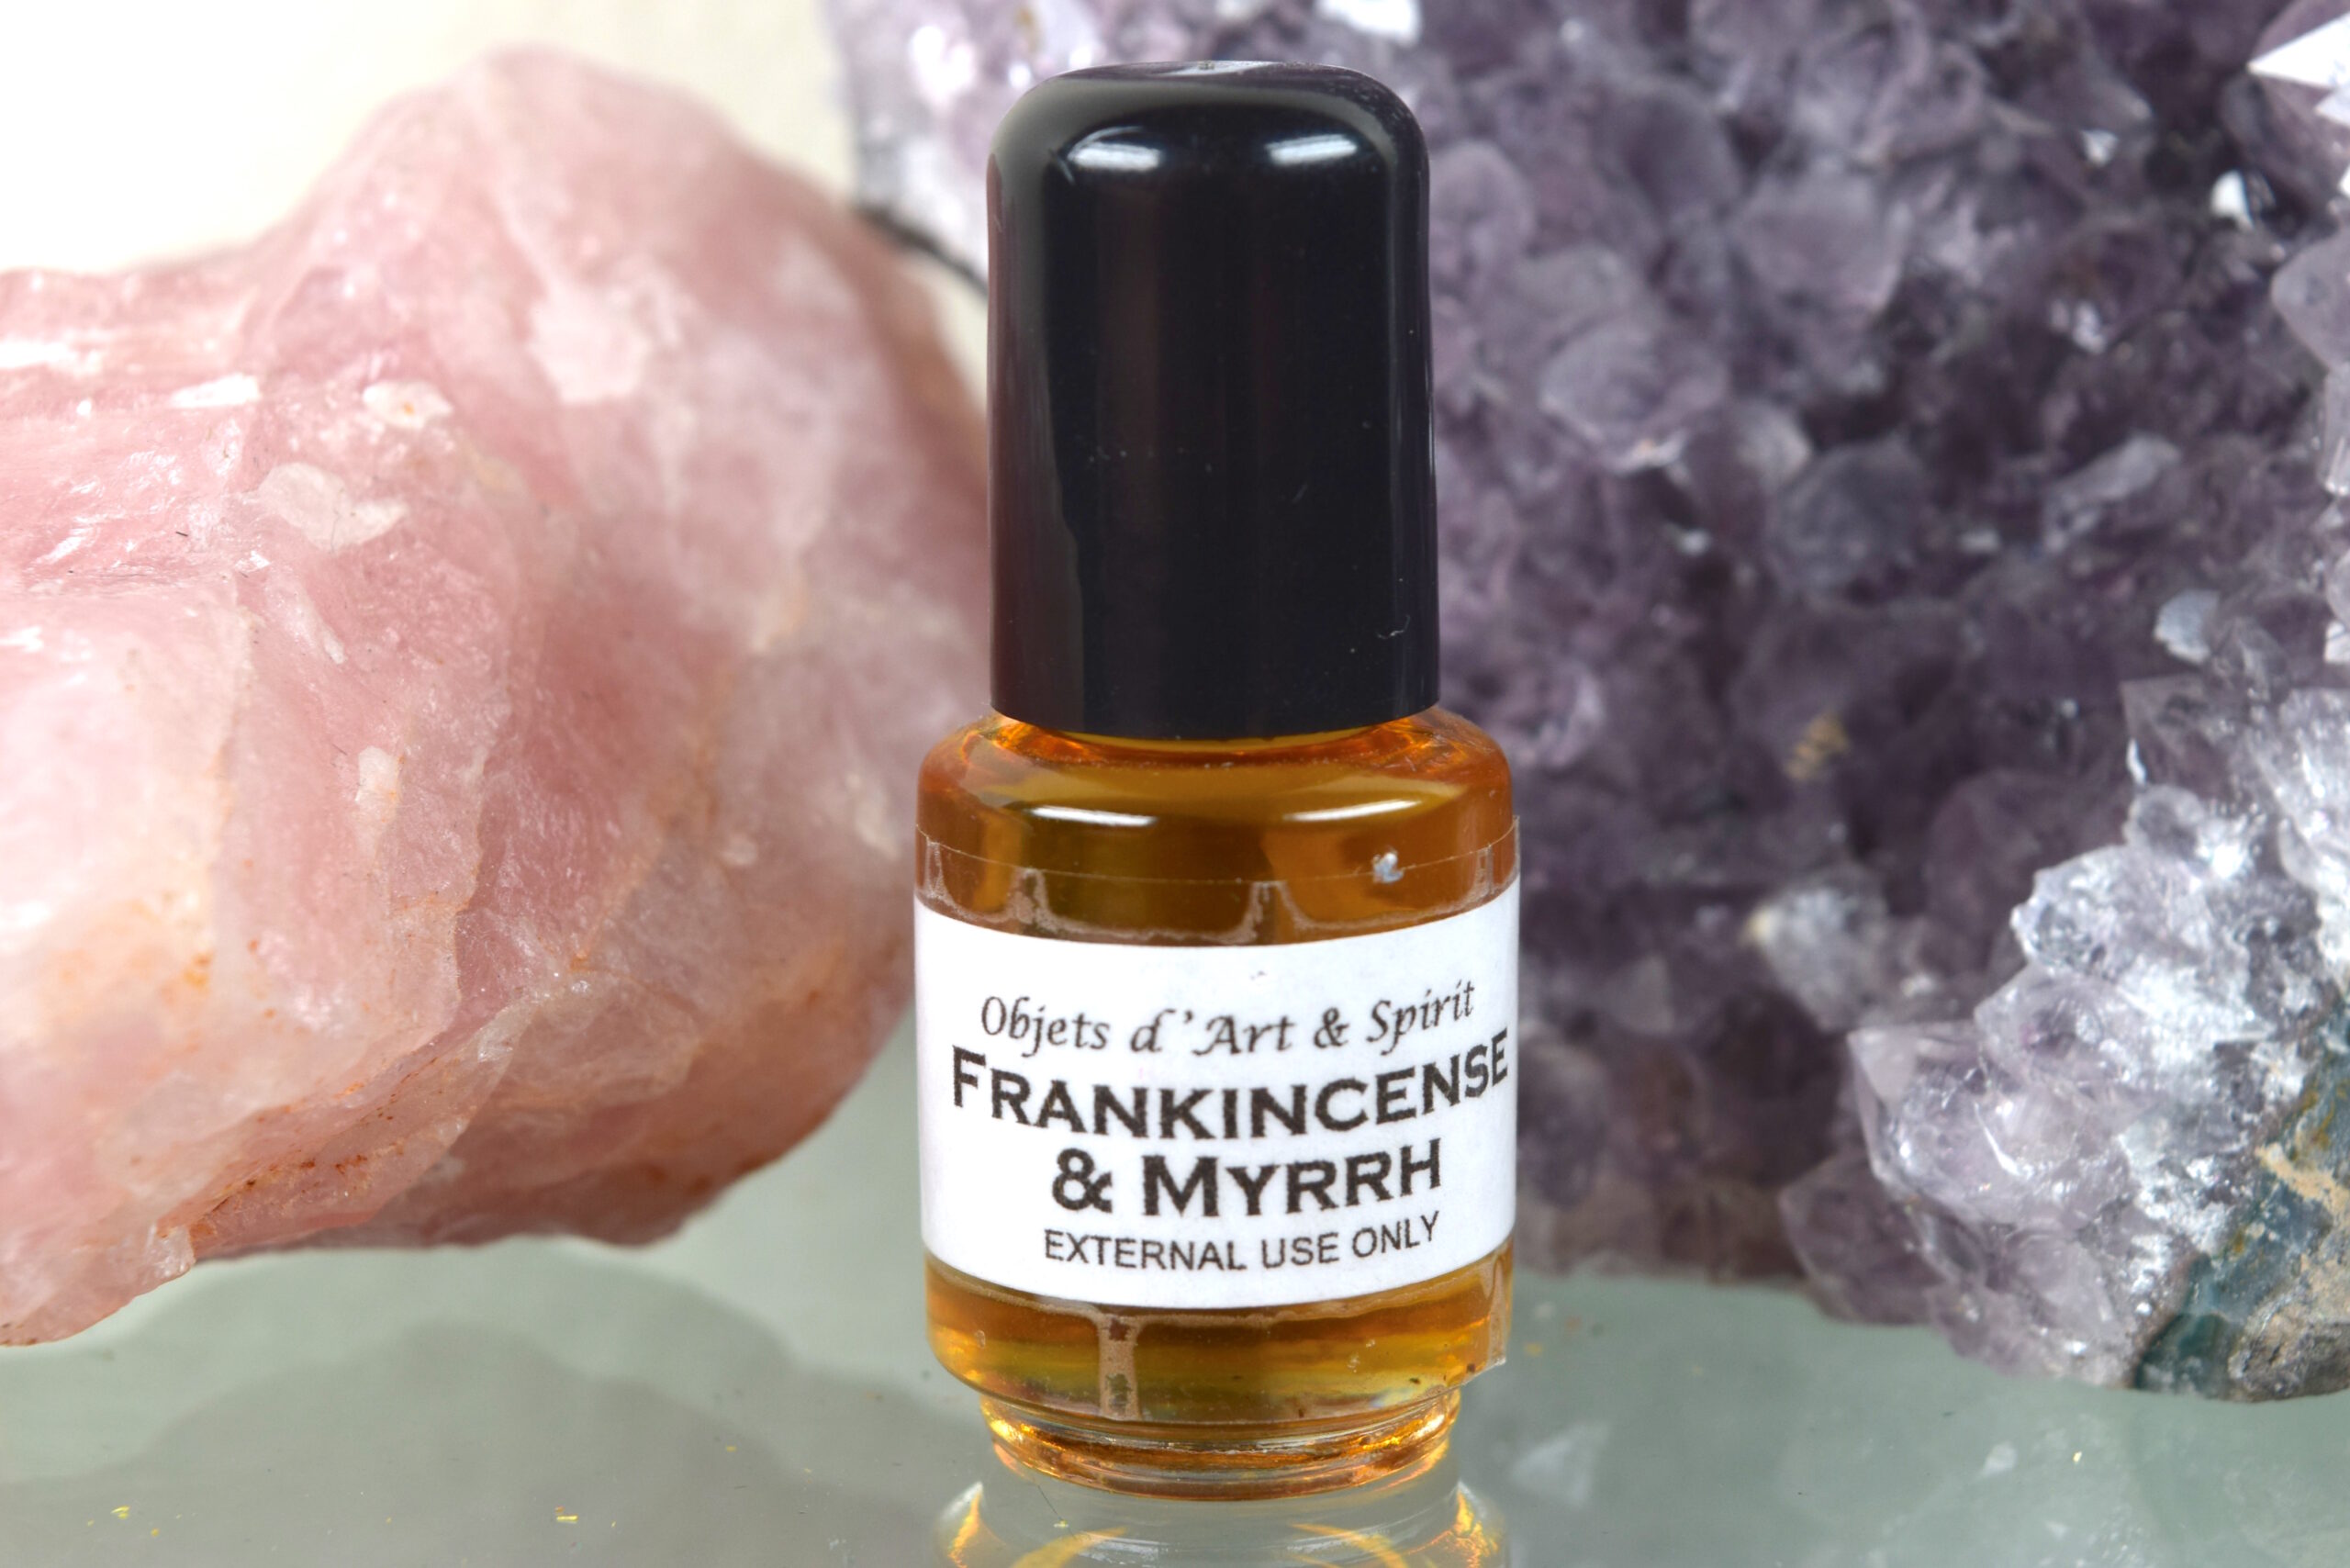 Frankincense and Myrrh Oil